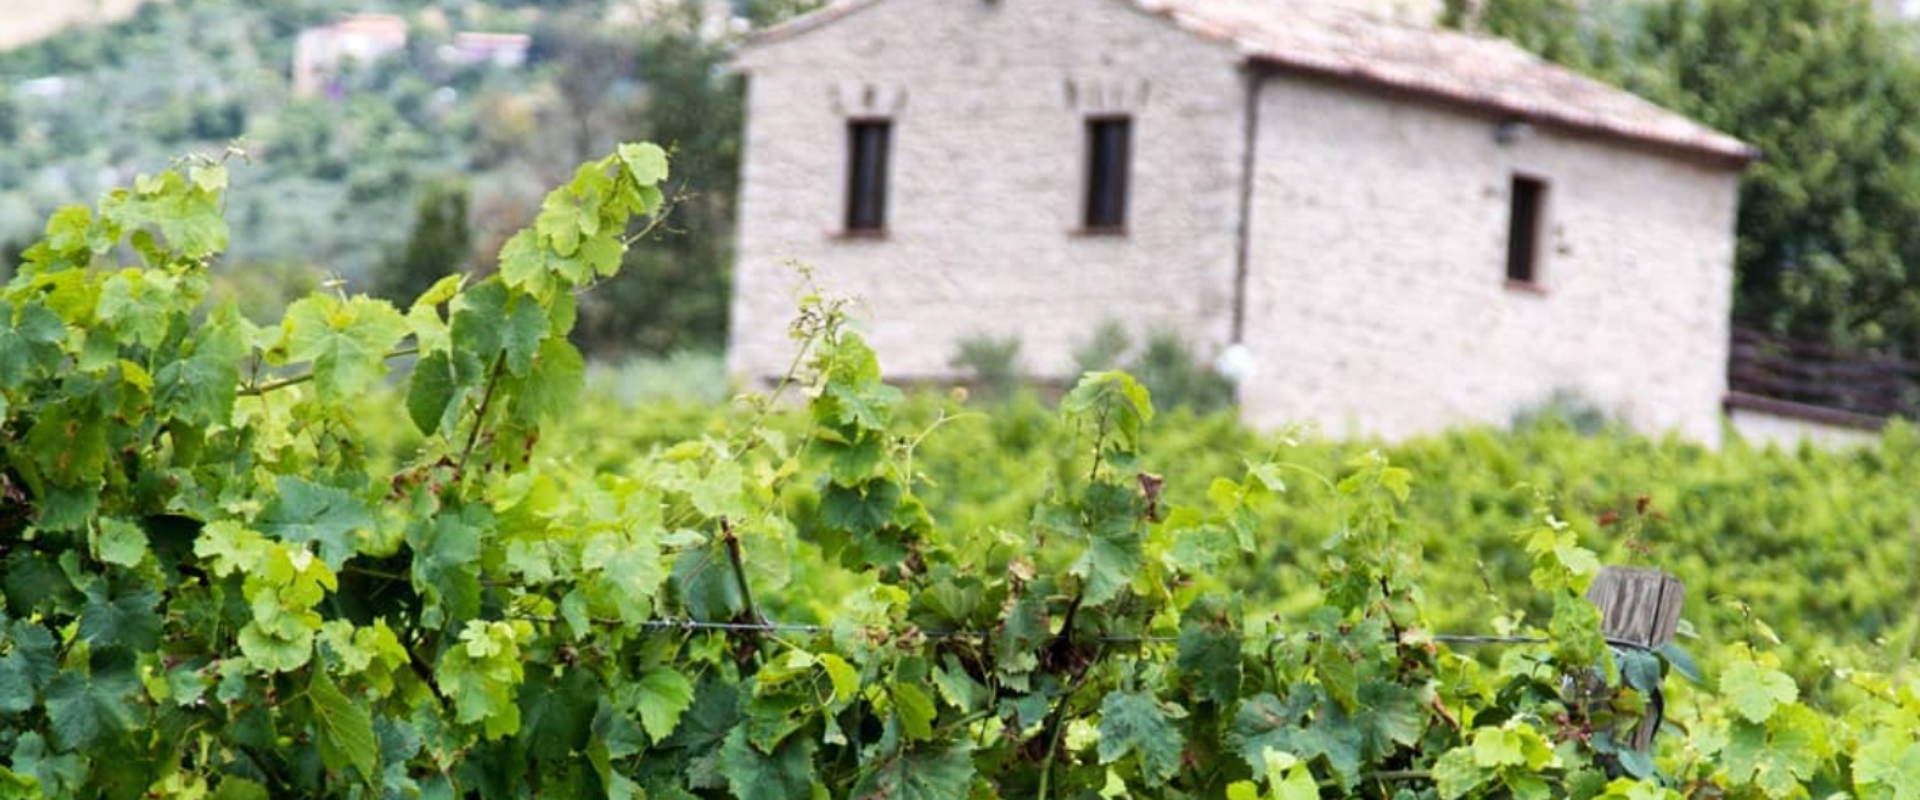 Pileum Vineyard in Italy